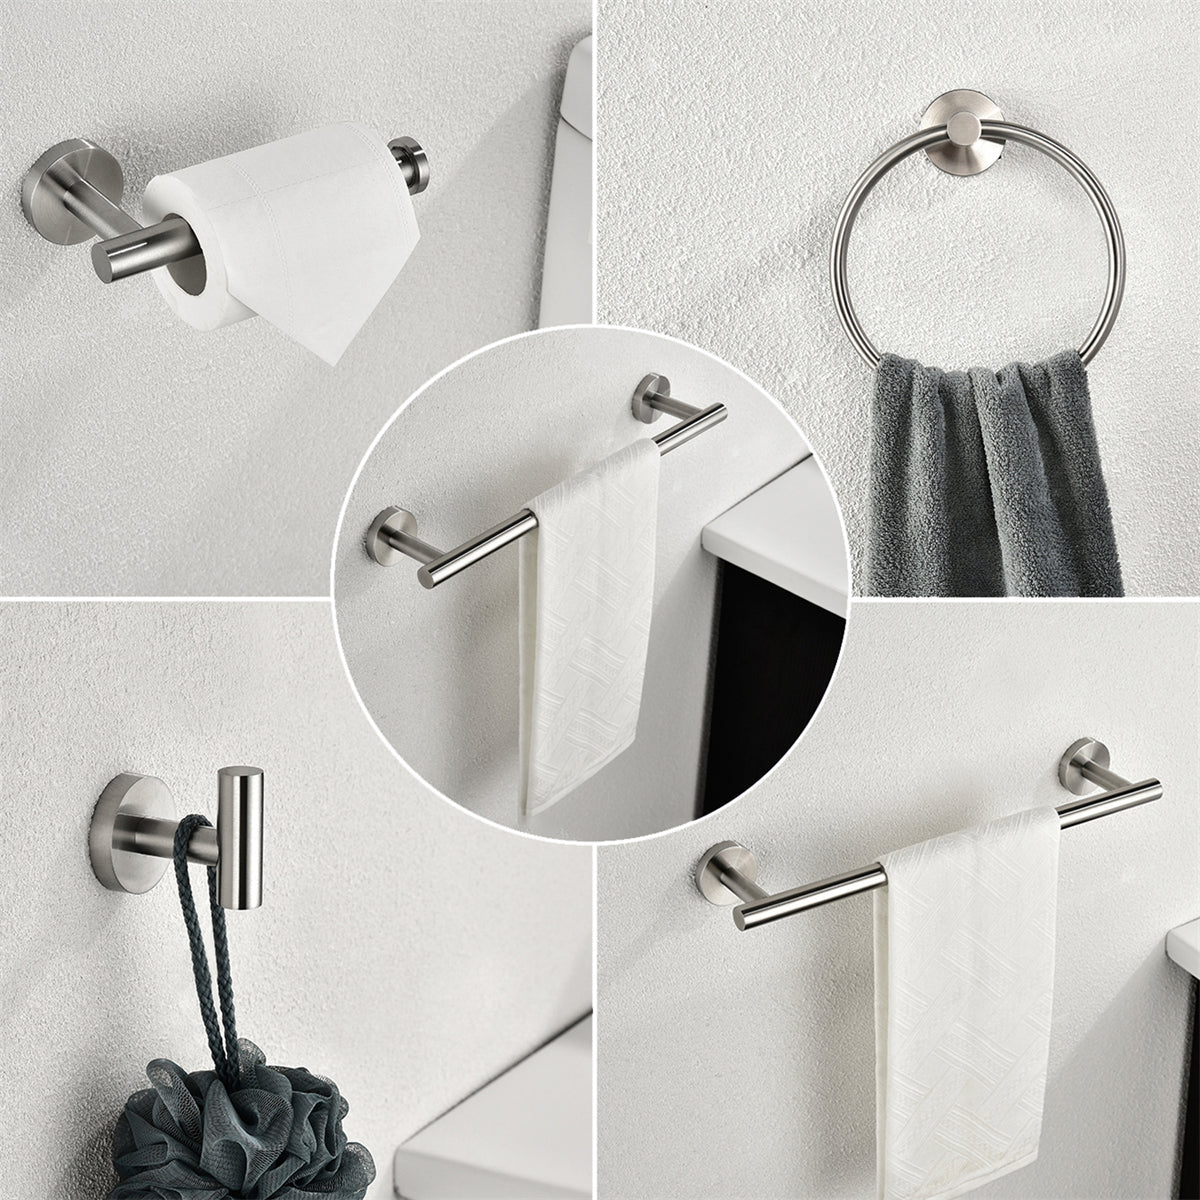 ExBrite Wall Mount Towel Rack Set 6 Piece Stainless Steel for Bathroom